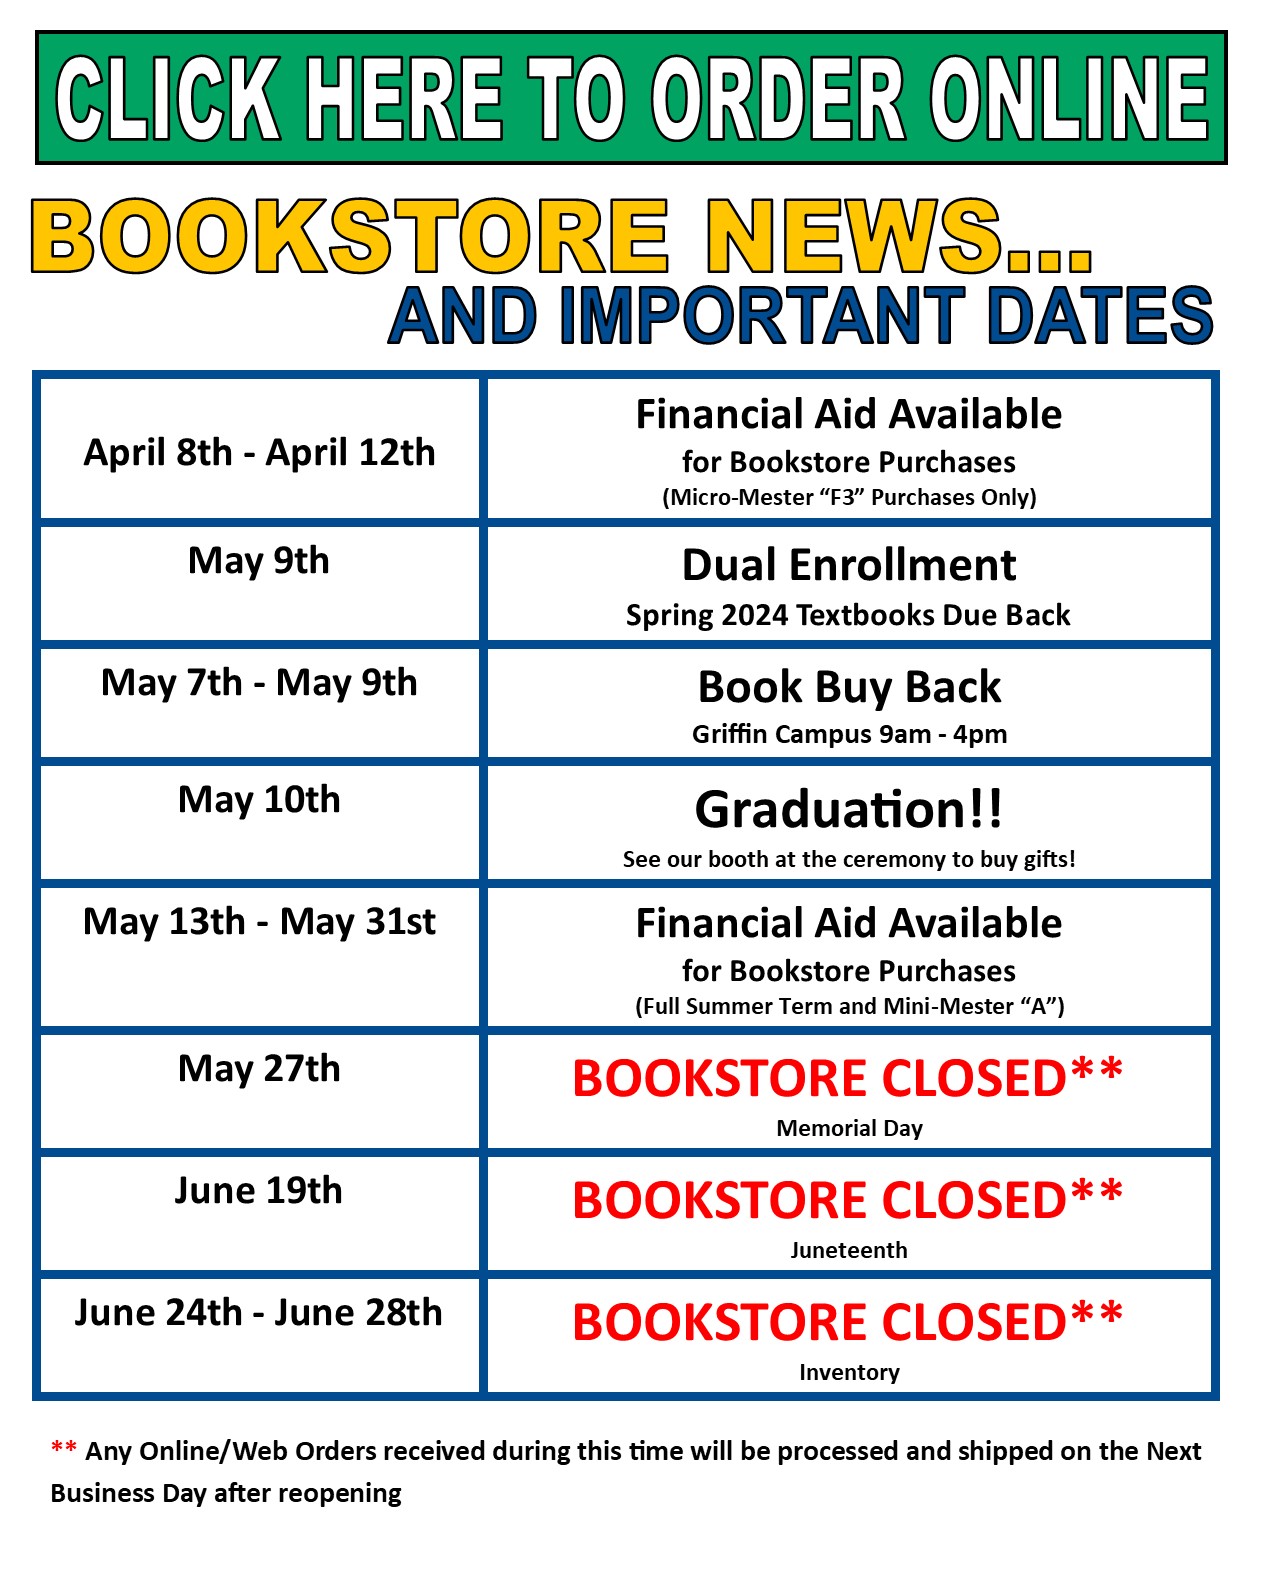 Important Bookstore Dates